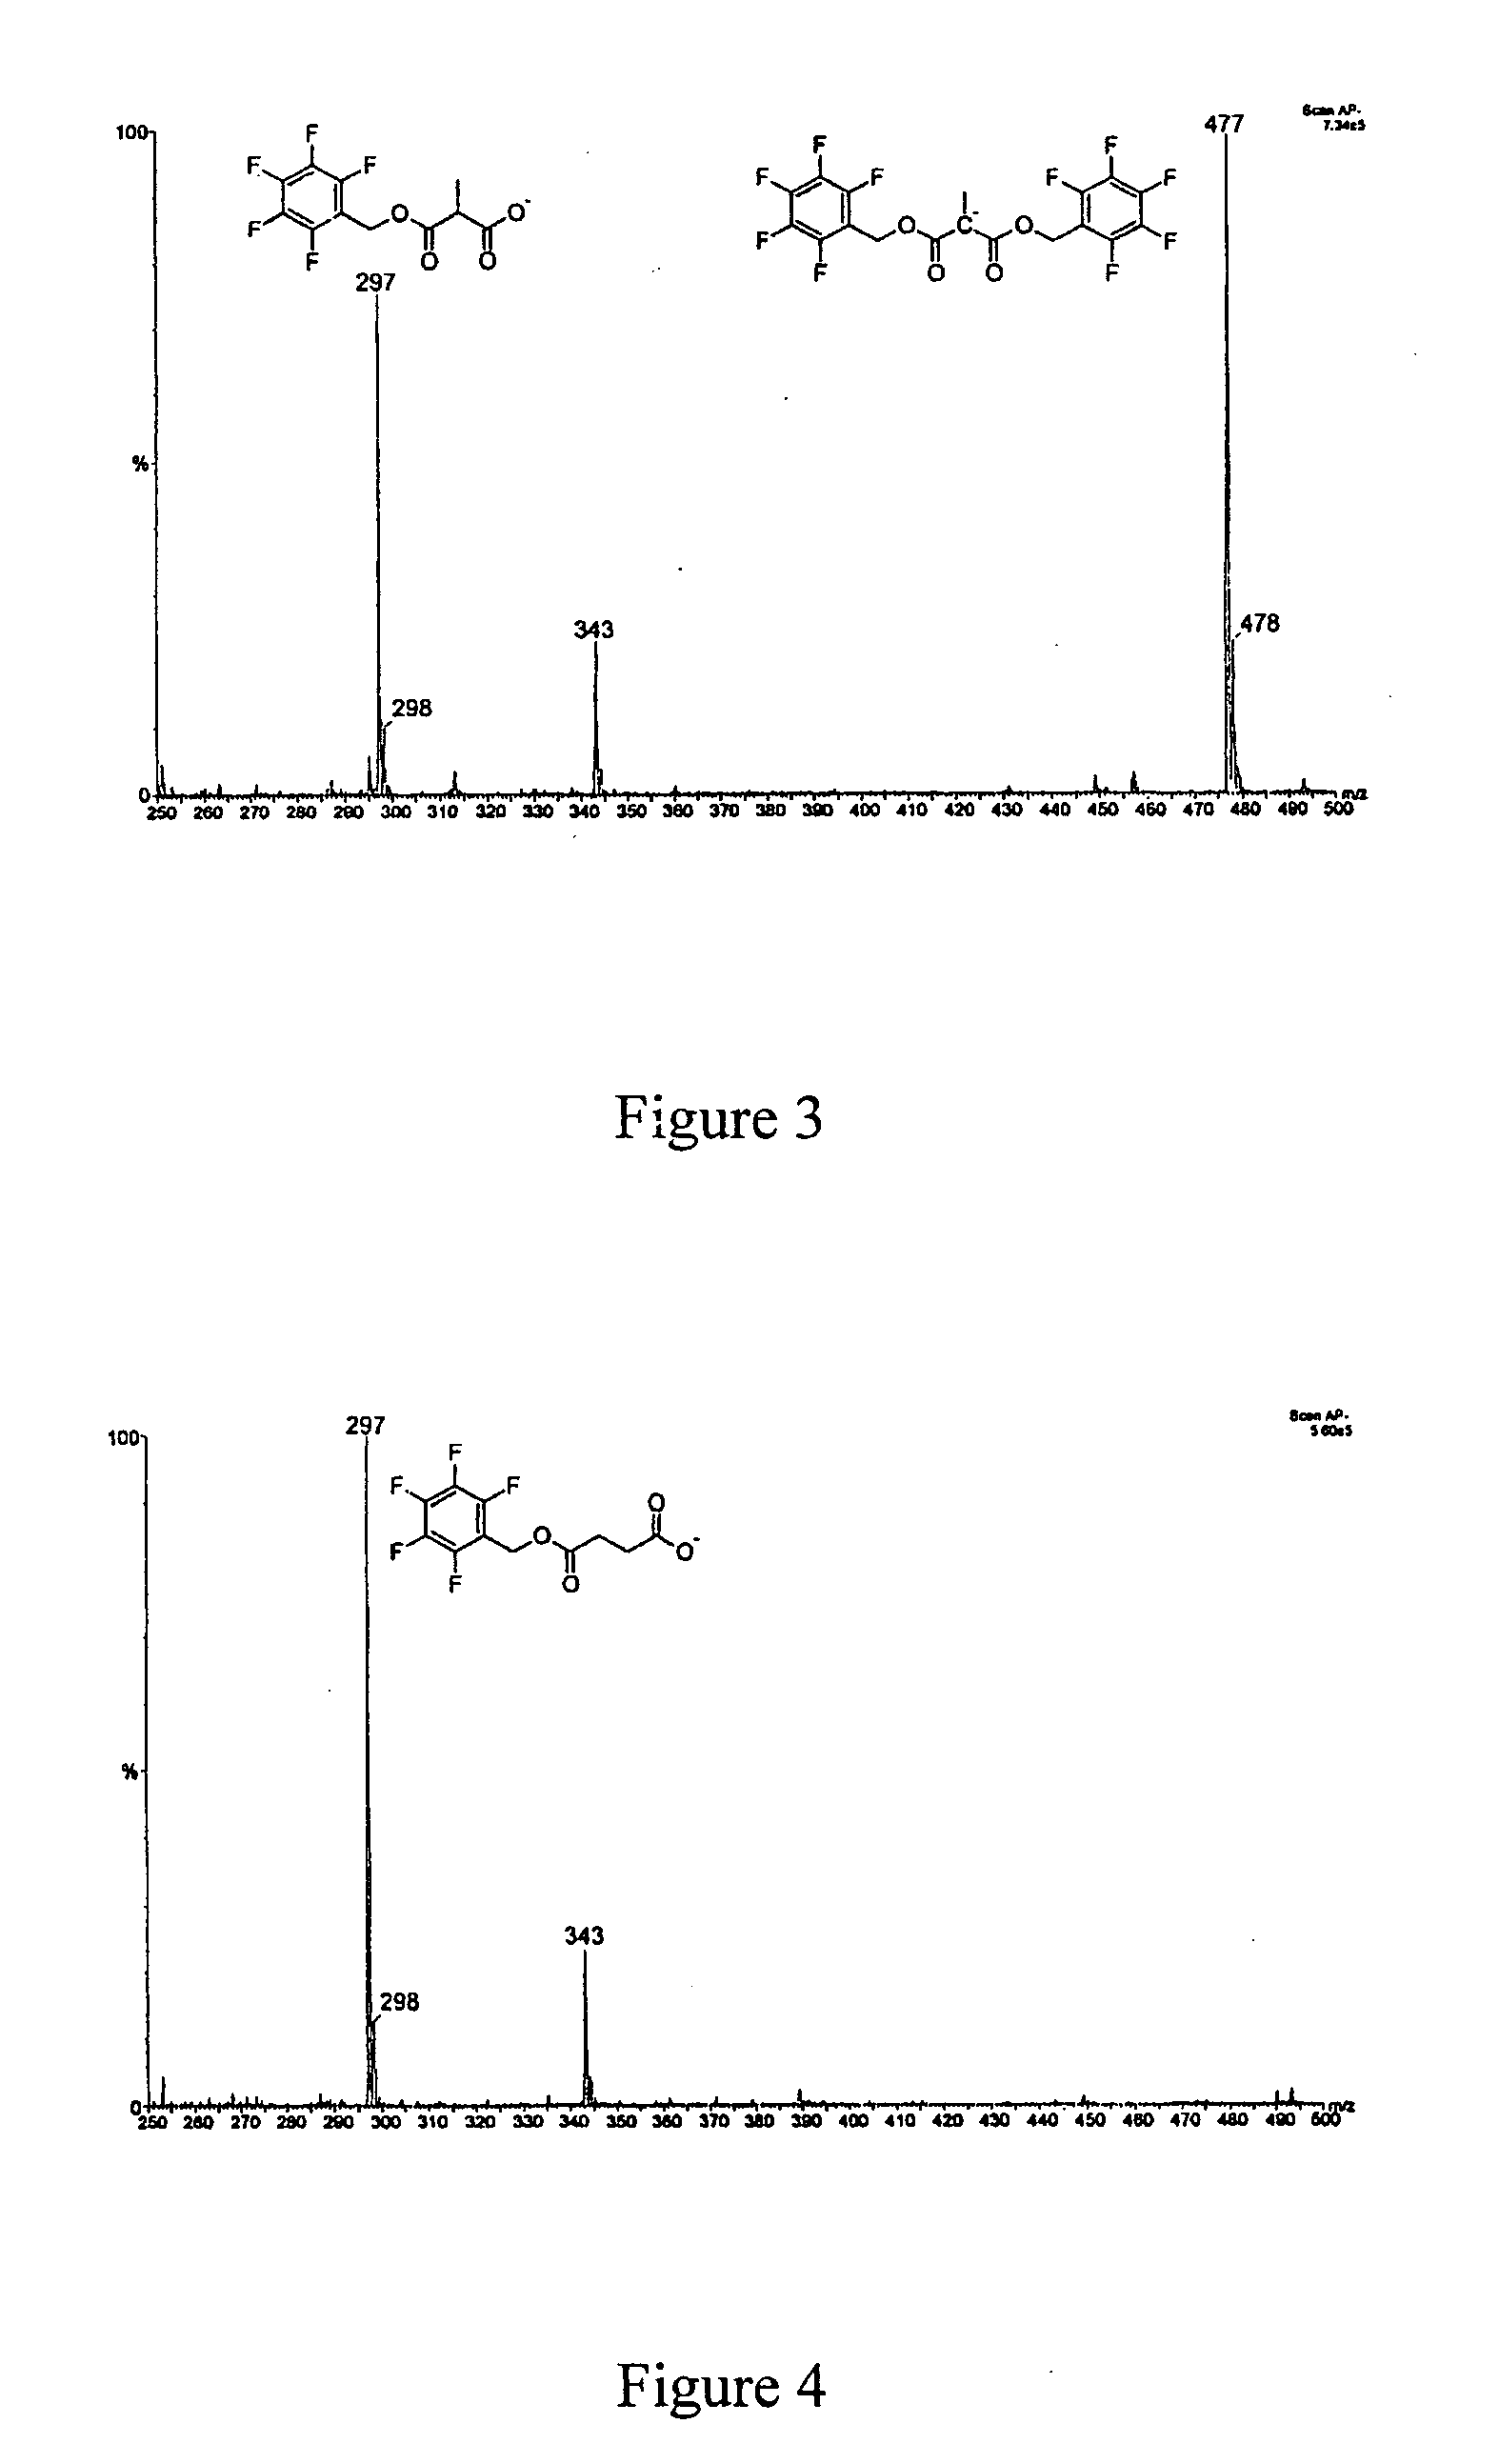 Method for methylmalonic acid detemination based on alkylative extraction associated to liquid chromatography coupled to mass spectrometry